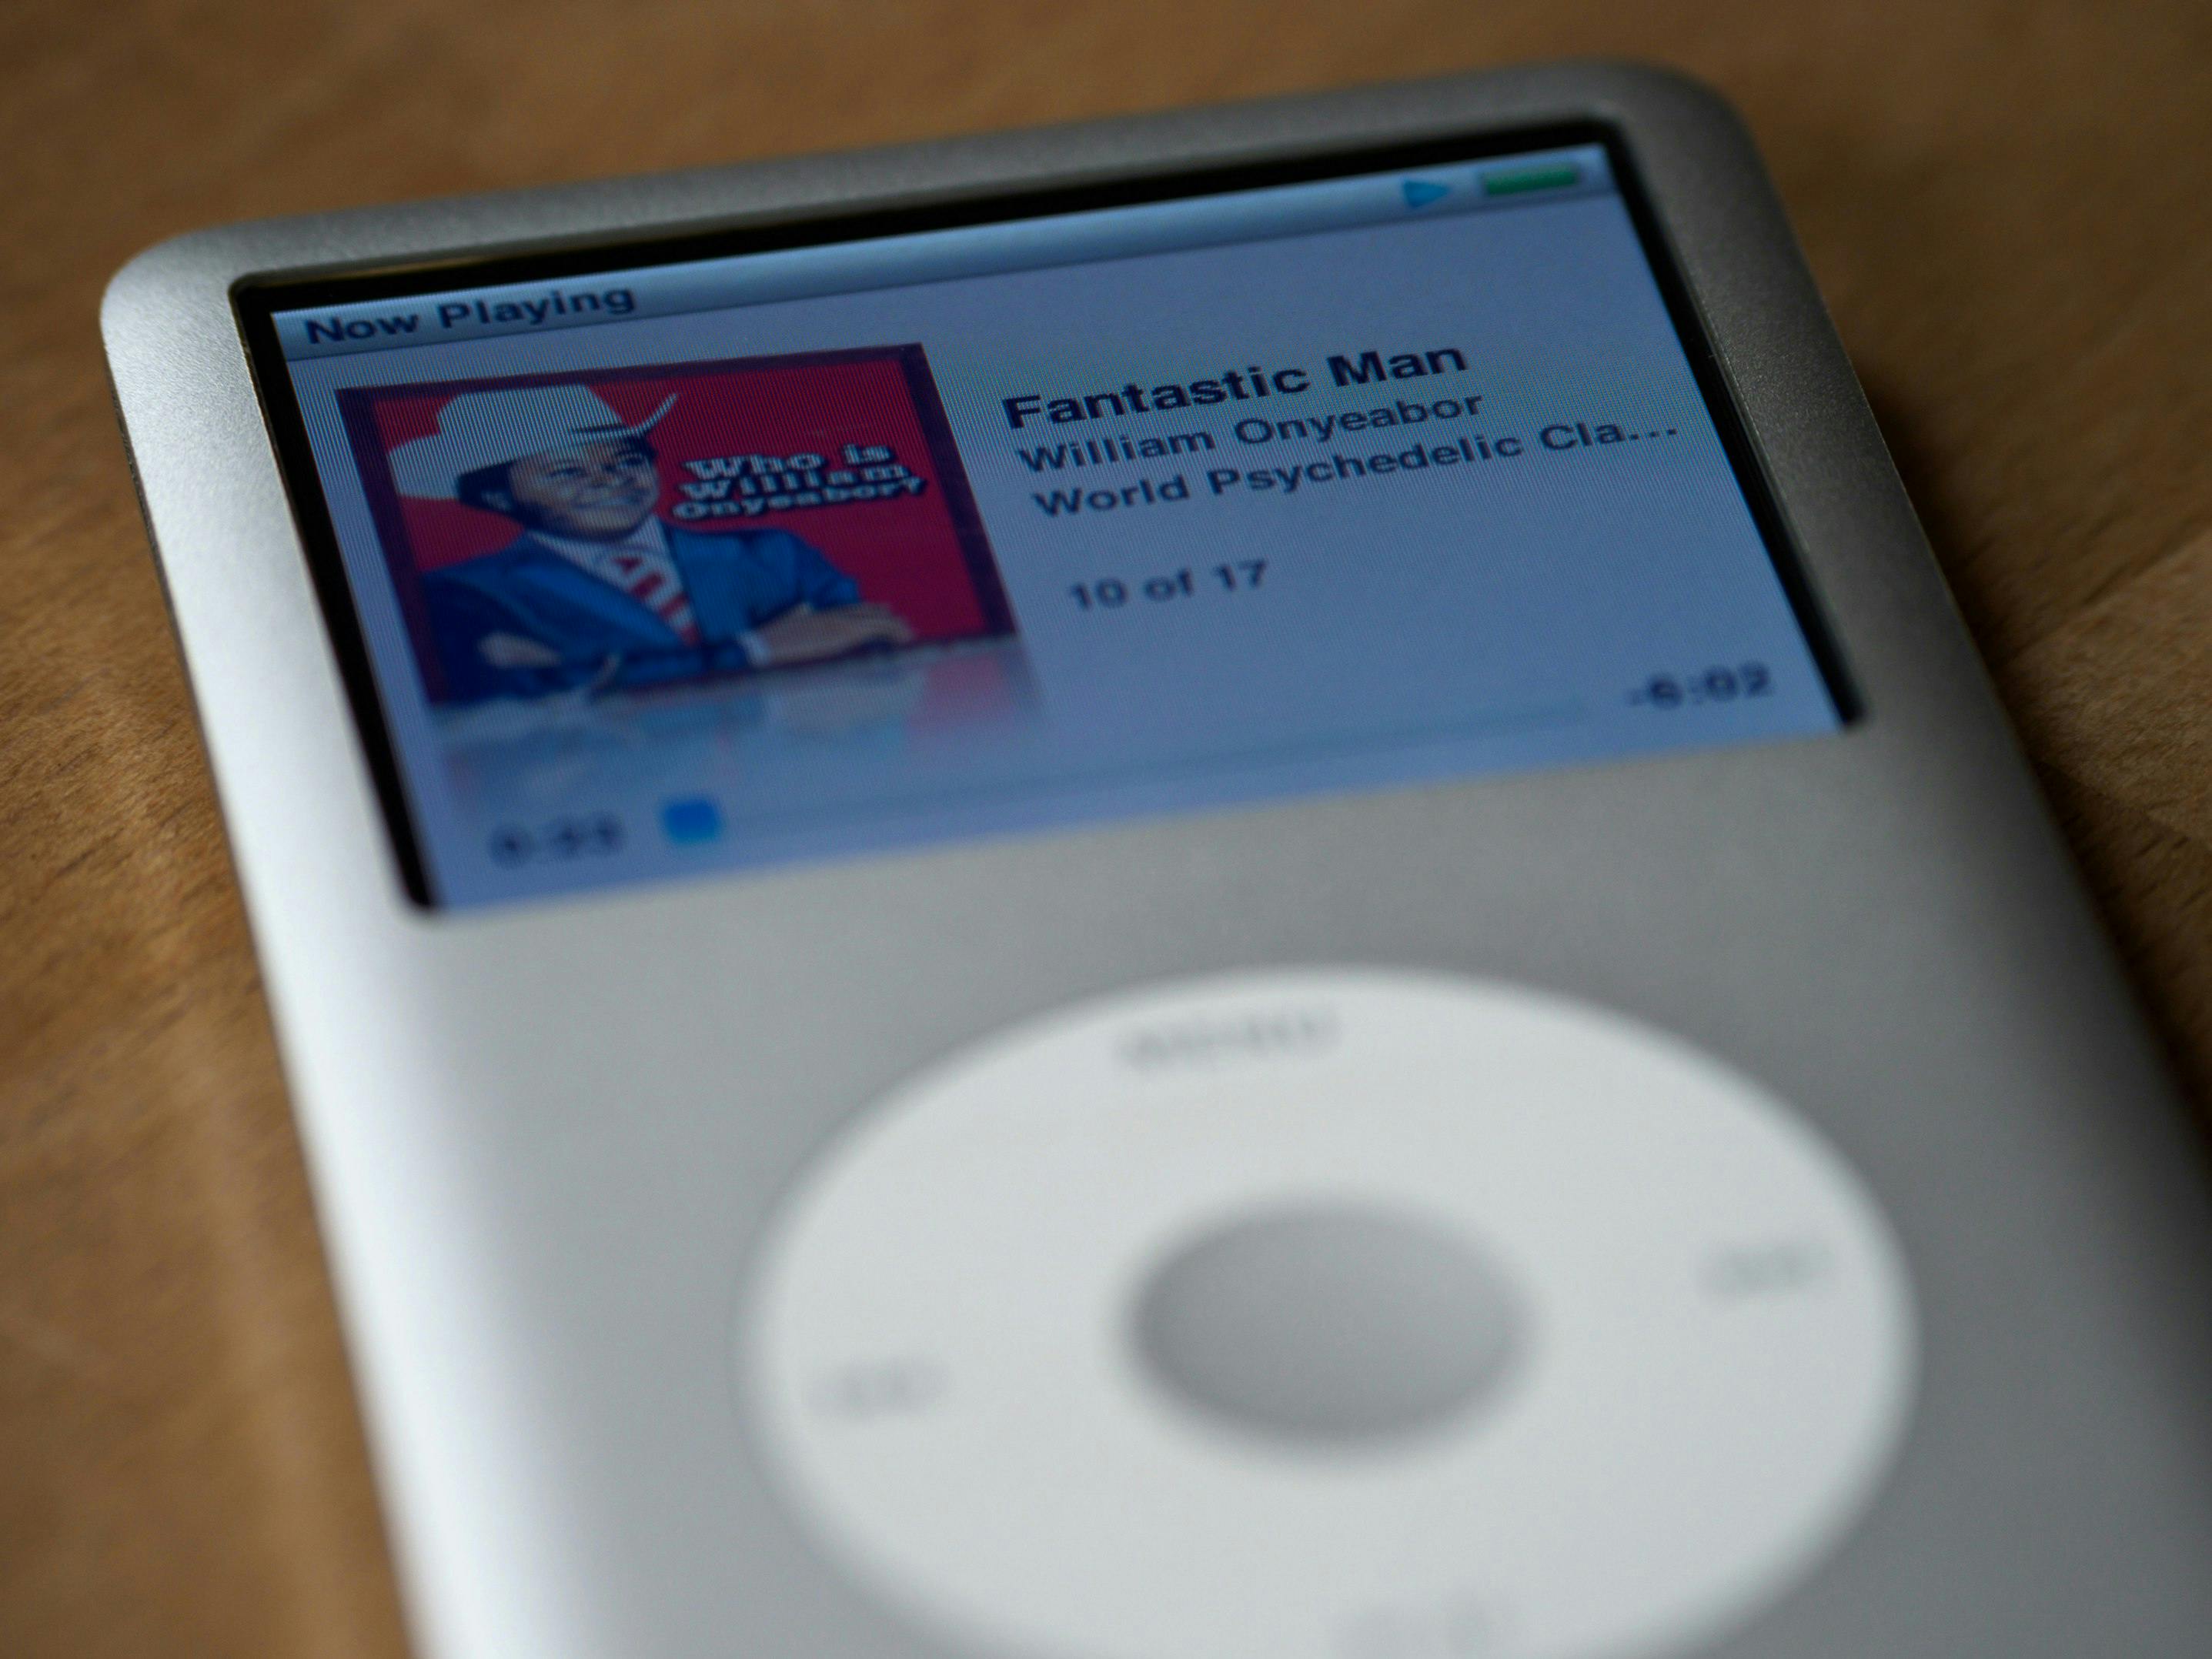 iPod Classic playing music.